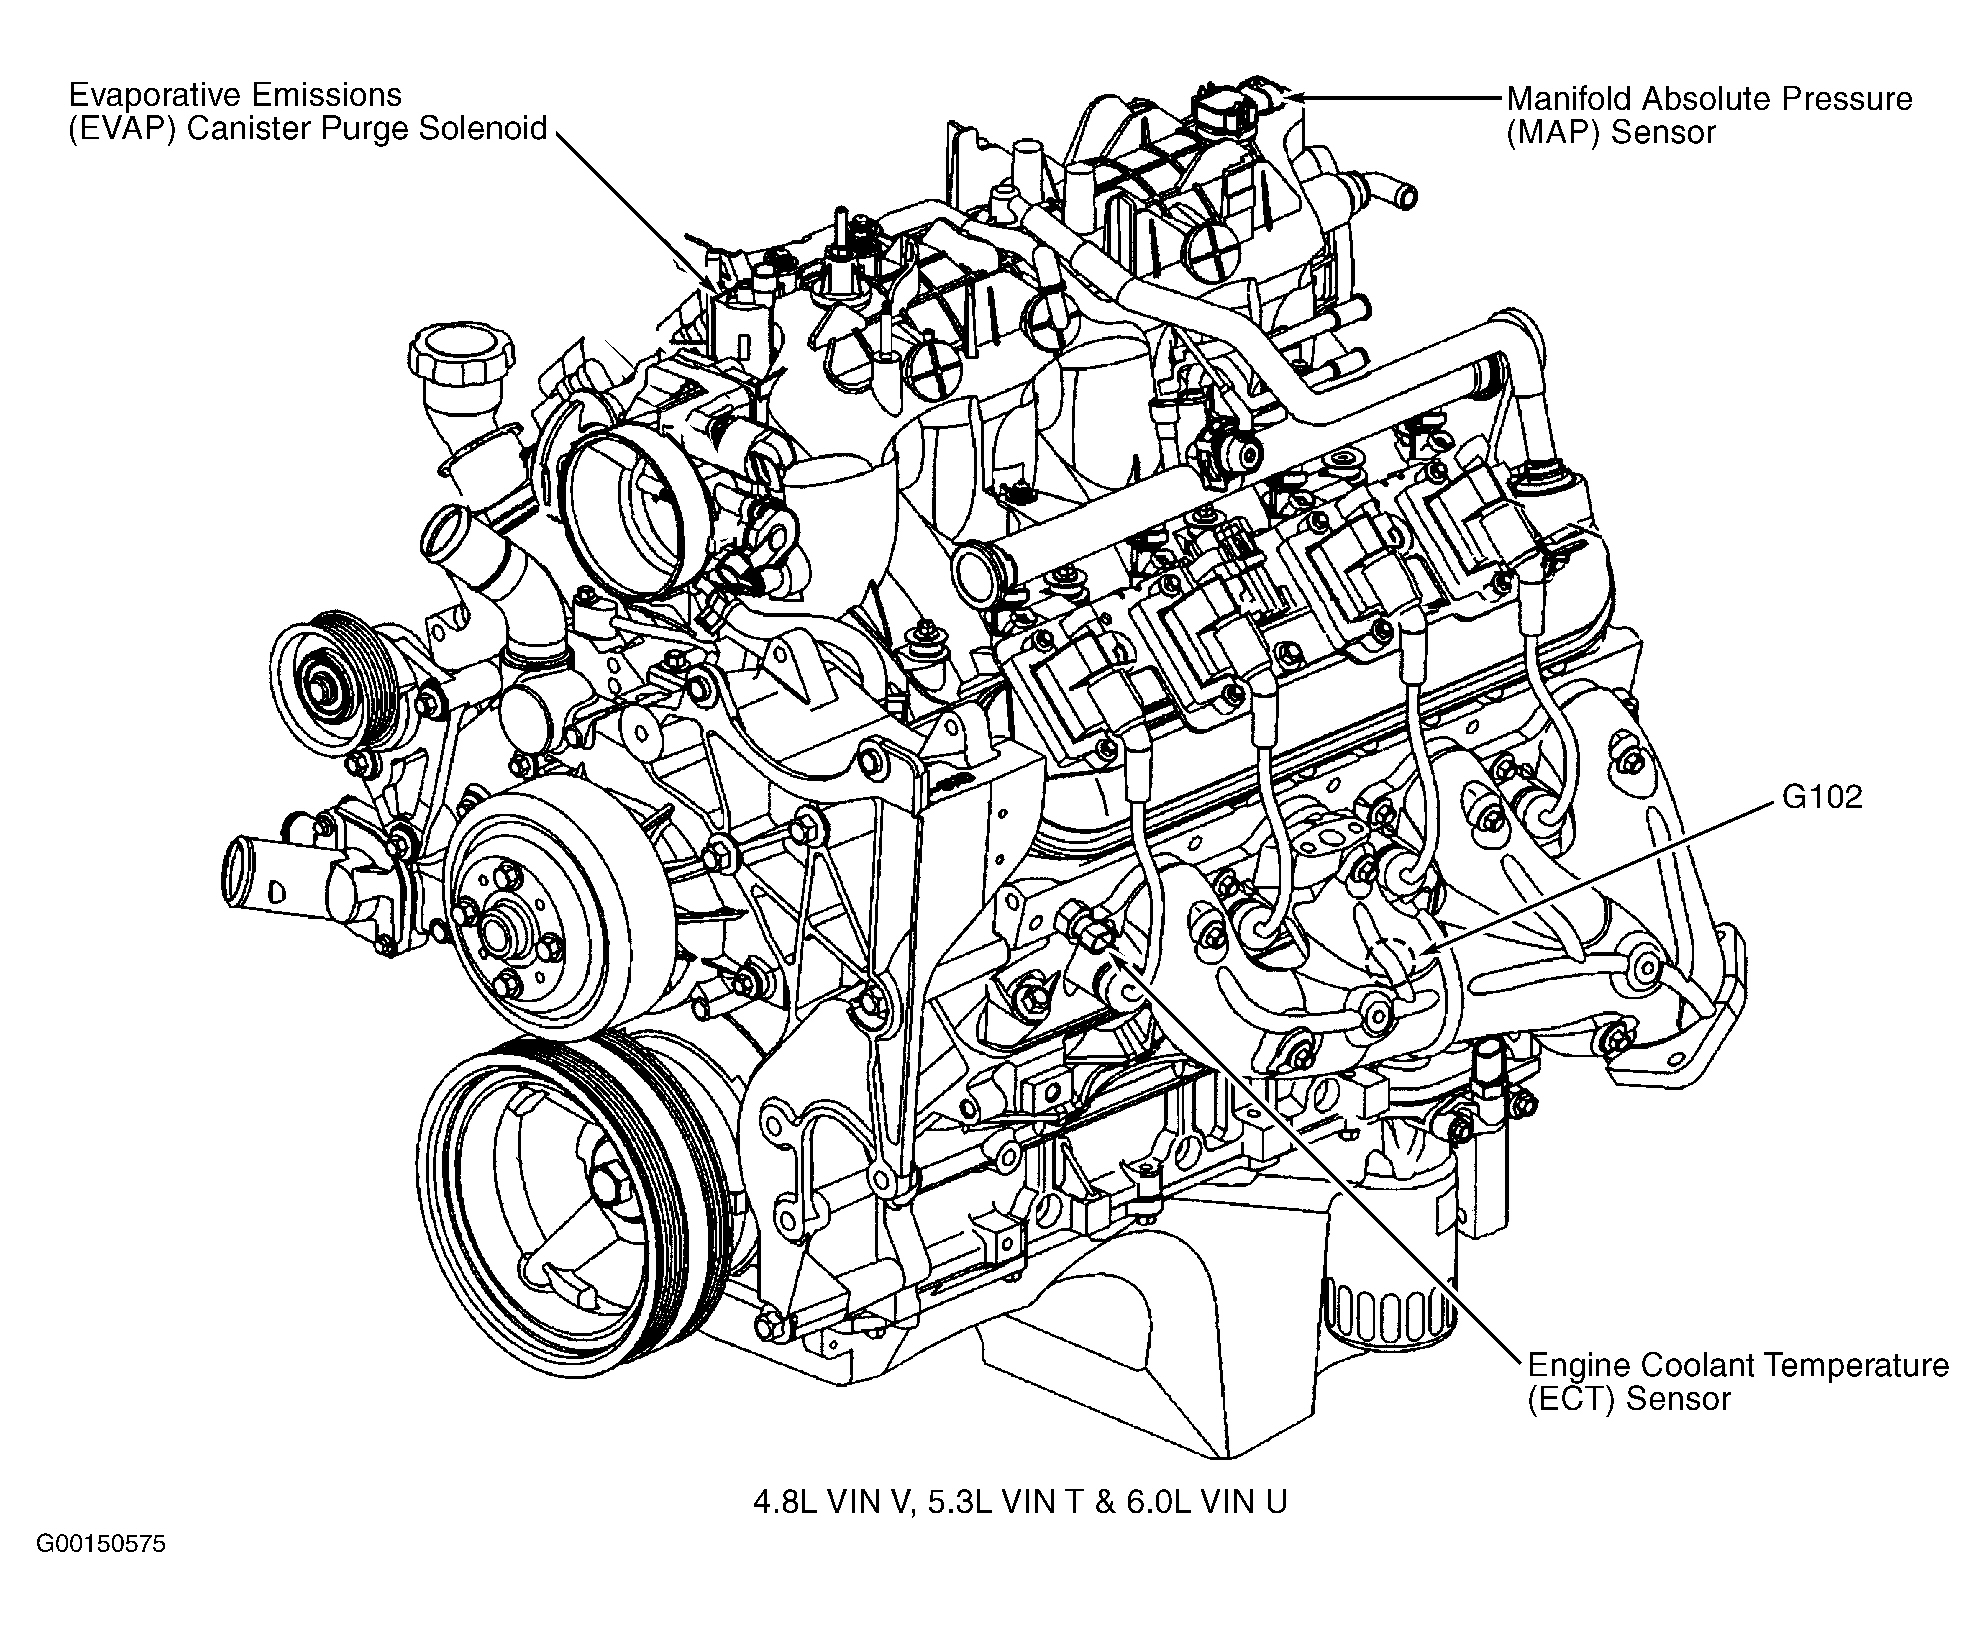 GMC Yukon Denali 2003 - Component Locations -  Left Side Of Engine (4.8L VIN V, 5.3L VIN T & 6.0L VIN U)